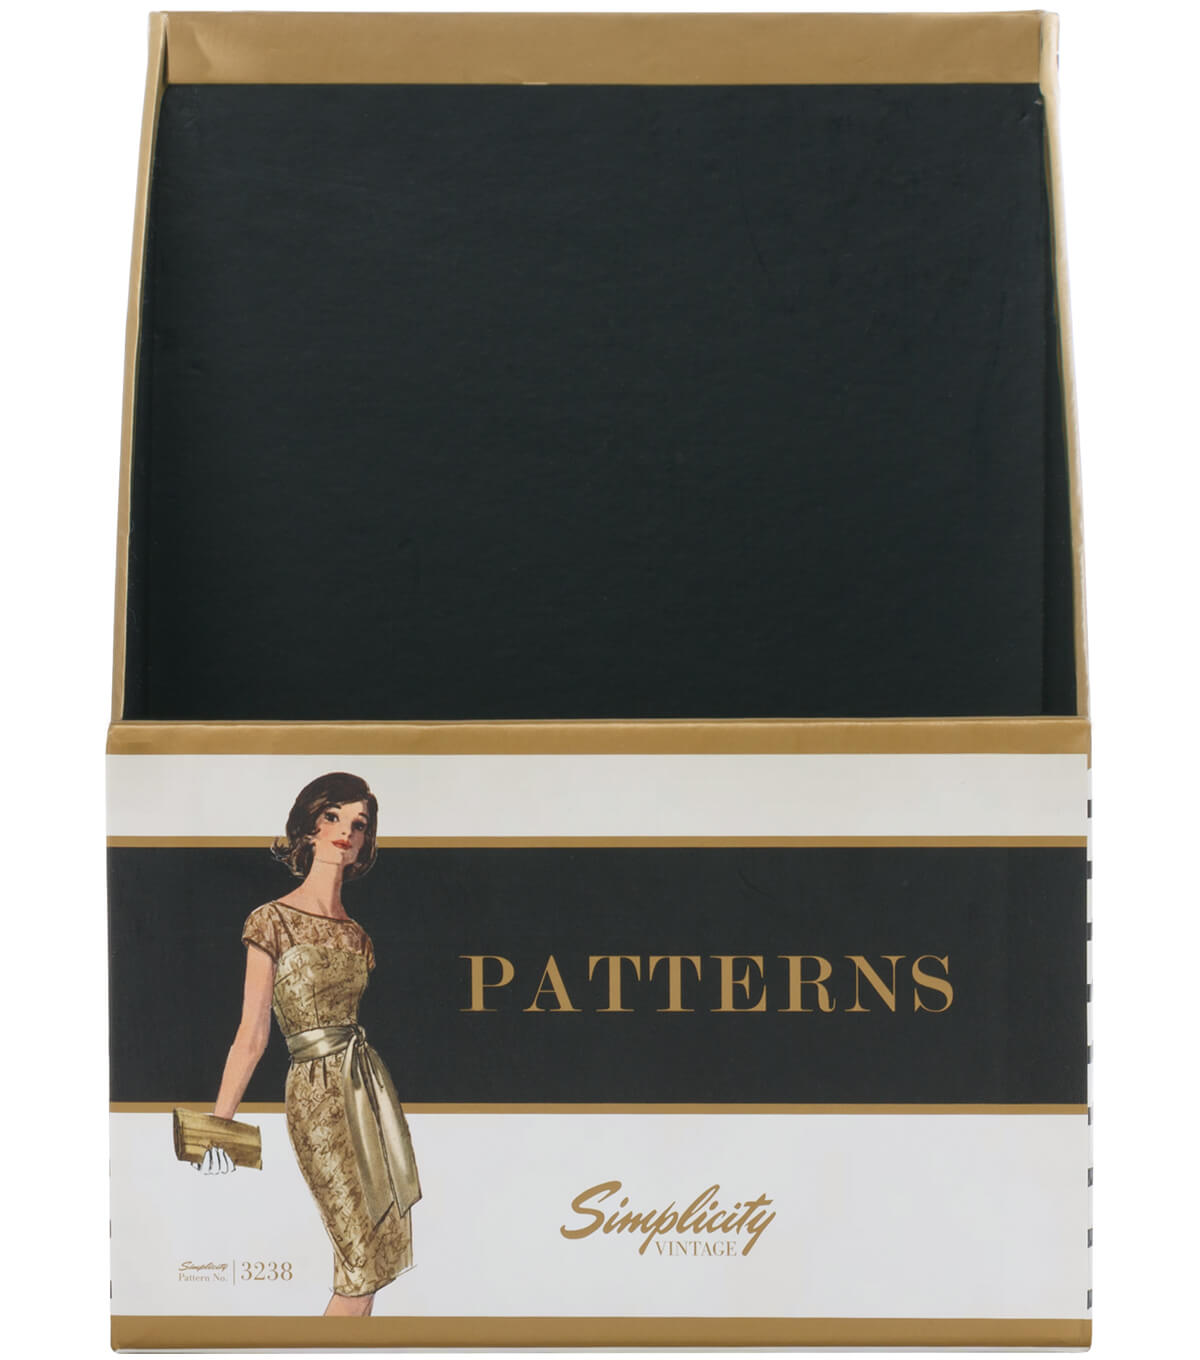 SIMPLICITY VINTAGE PATTERN STORAGE BOXES - 1 LADY